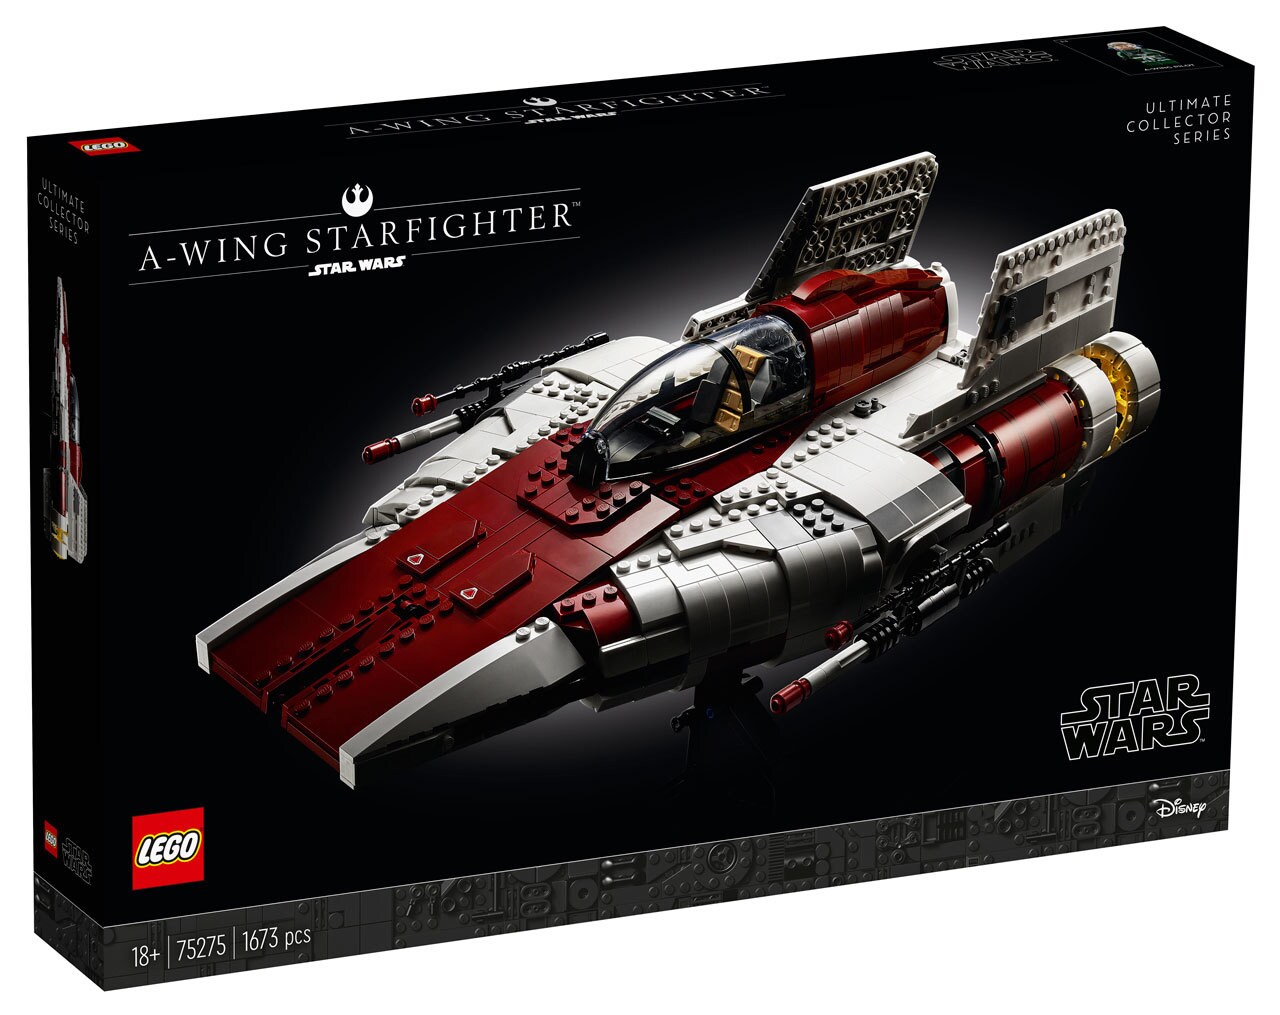 LEGO Star Wars A-wing Starfighter box